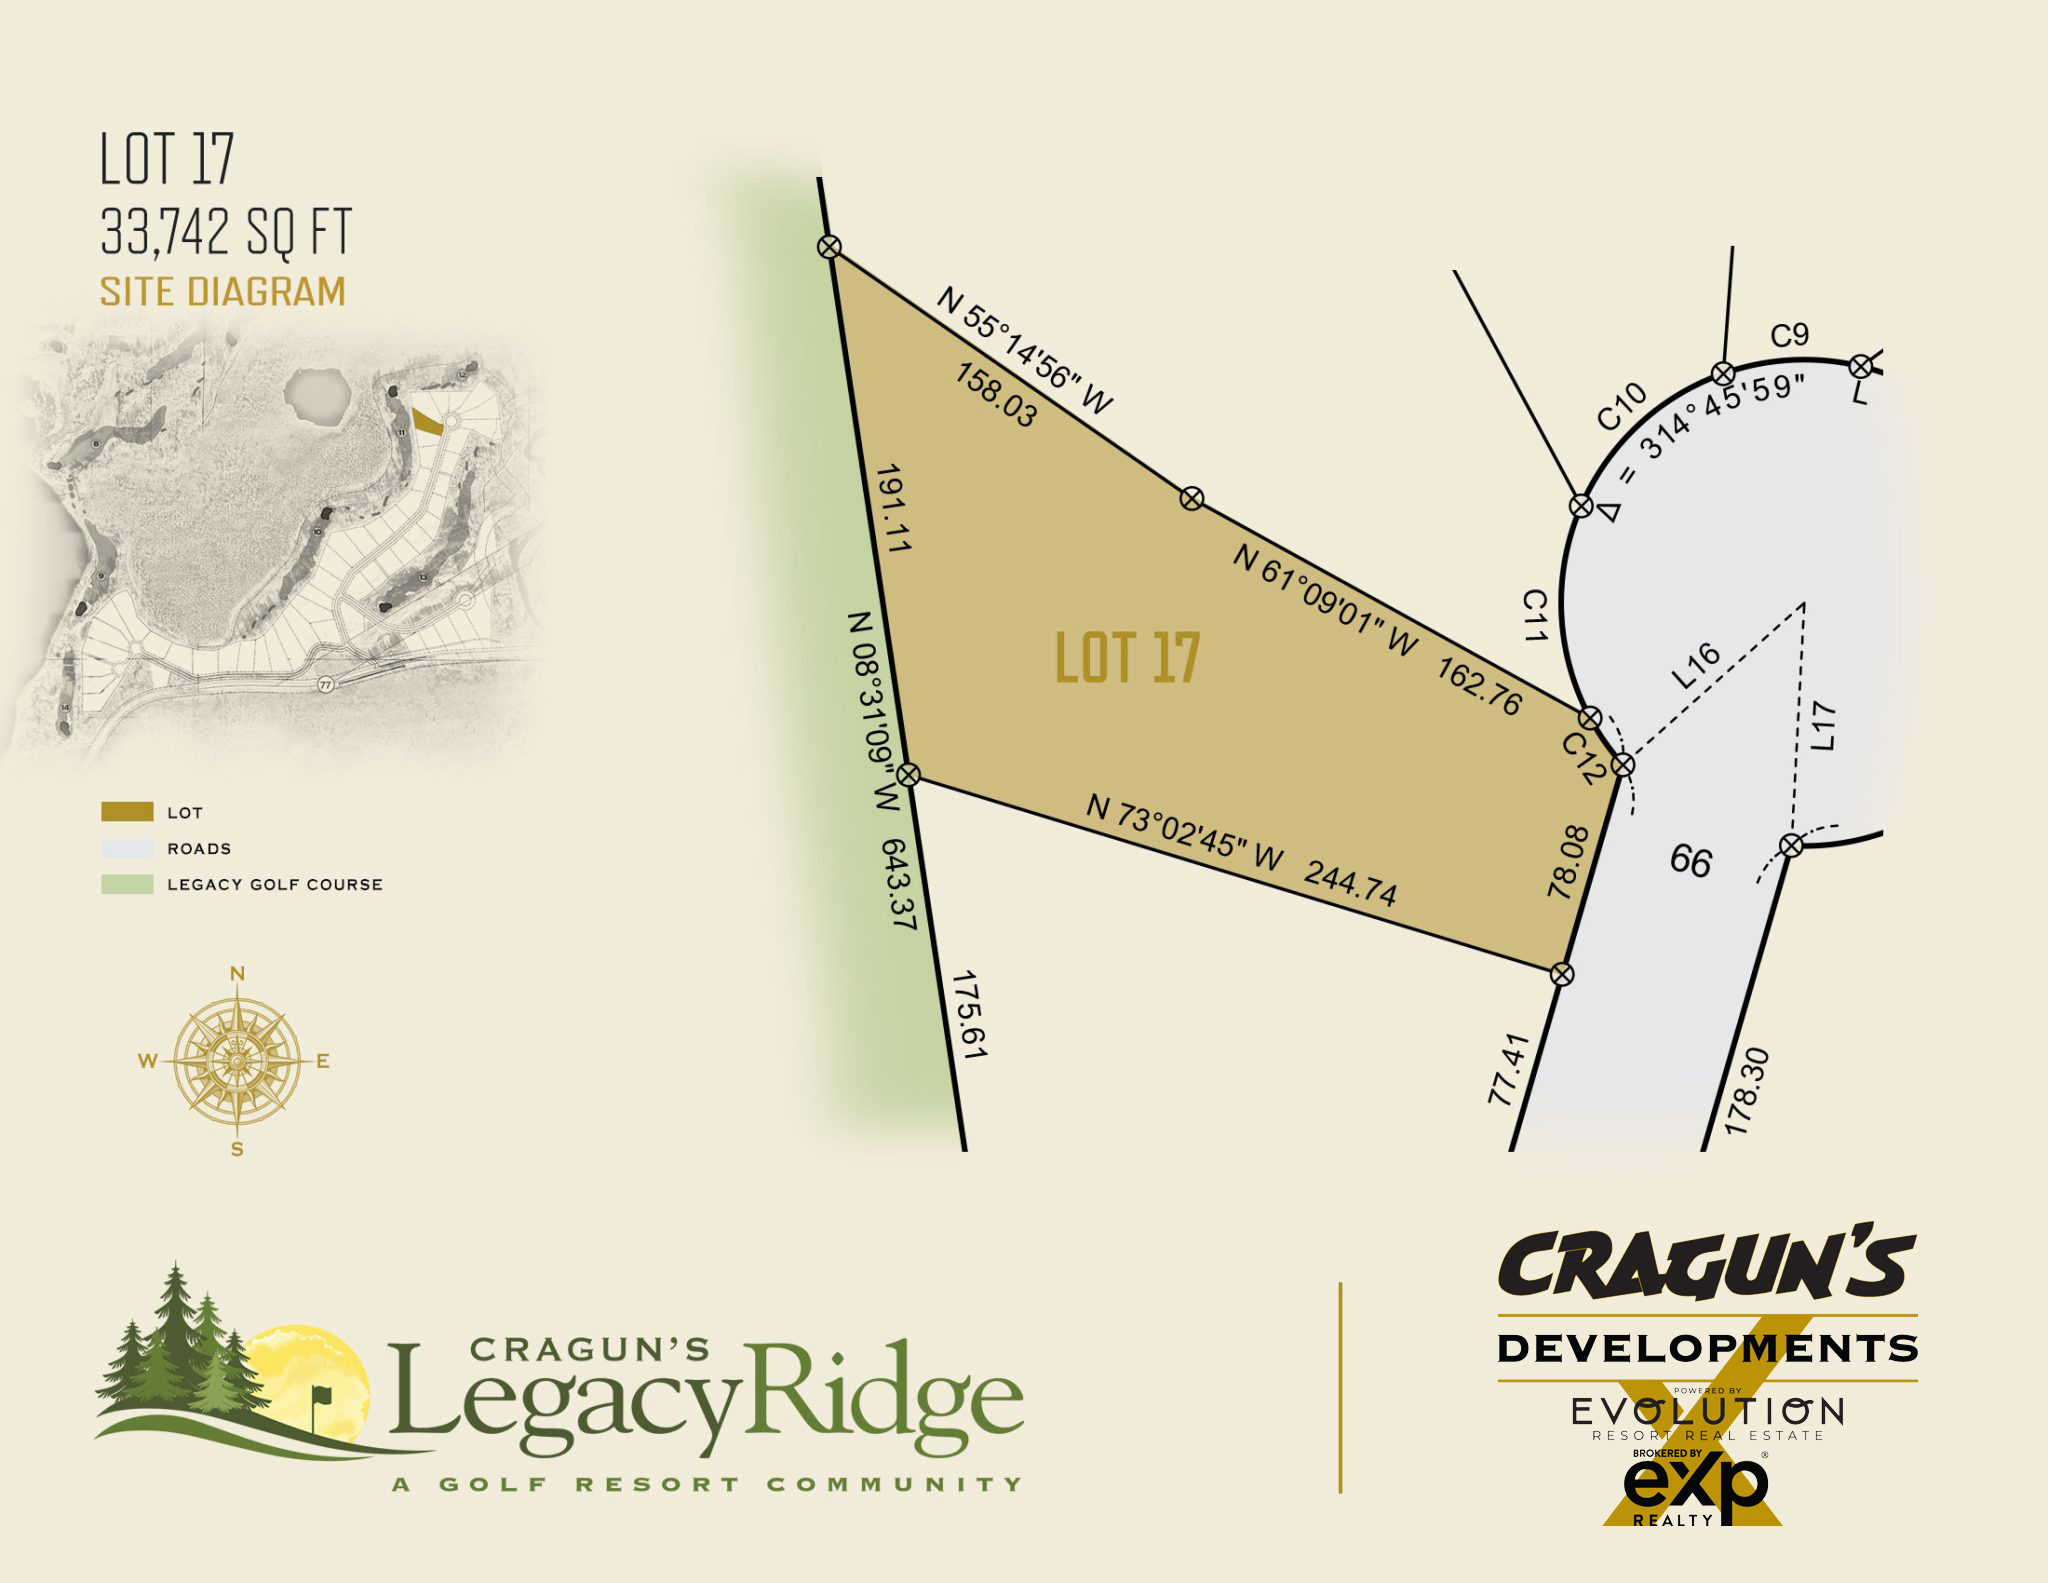 Legacy Ridge Lot 17 at Cragun's Developments in Brainerd, MN